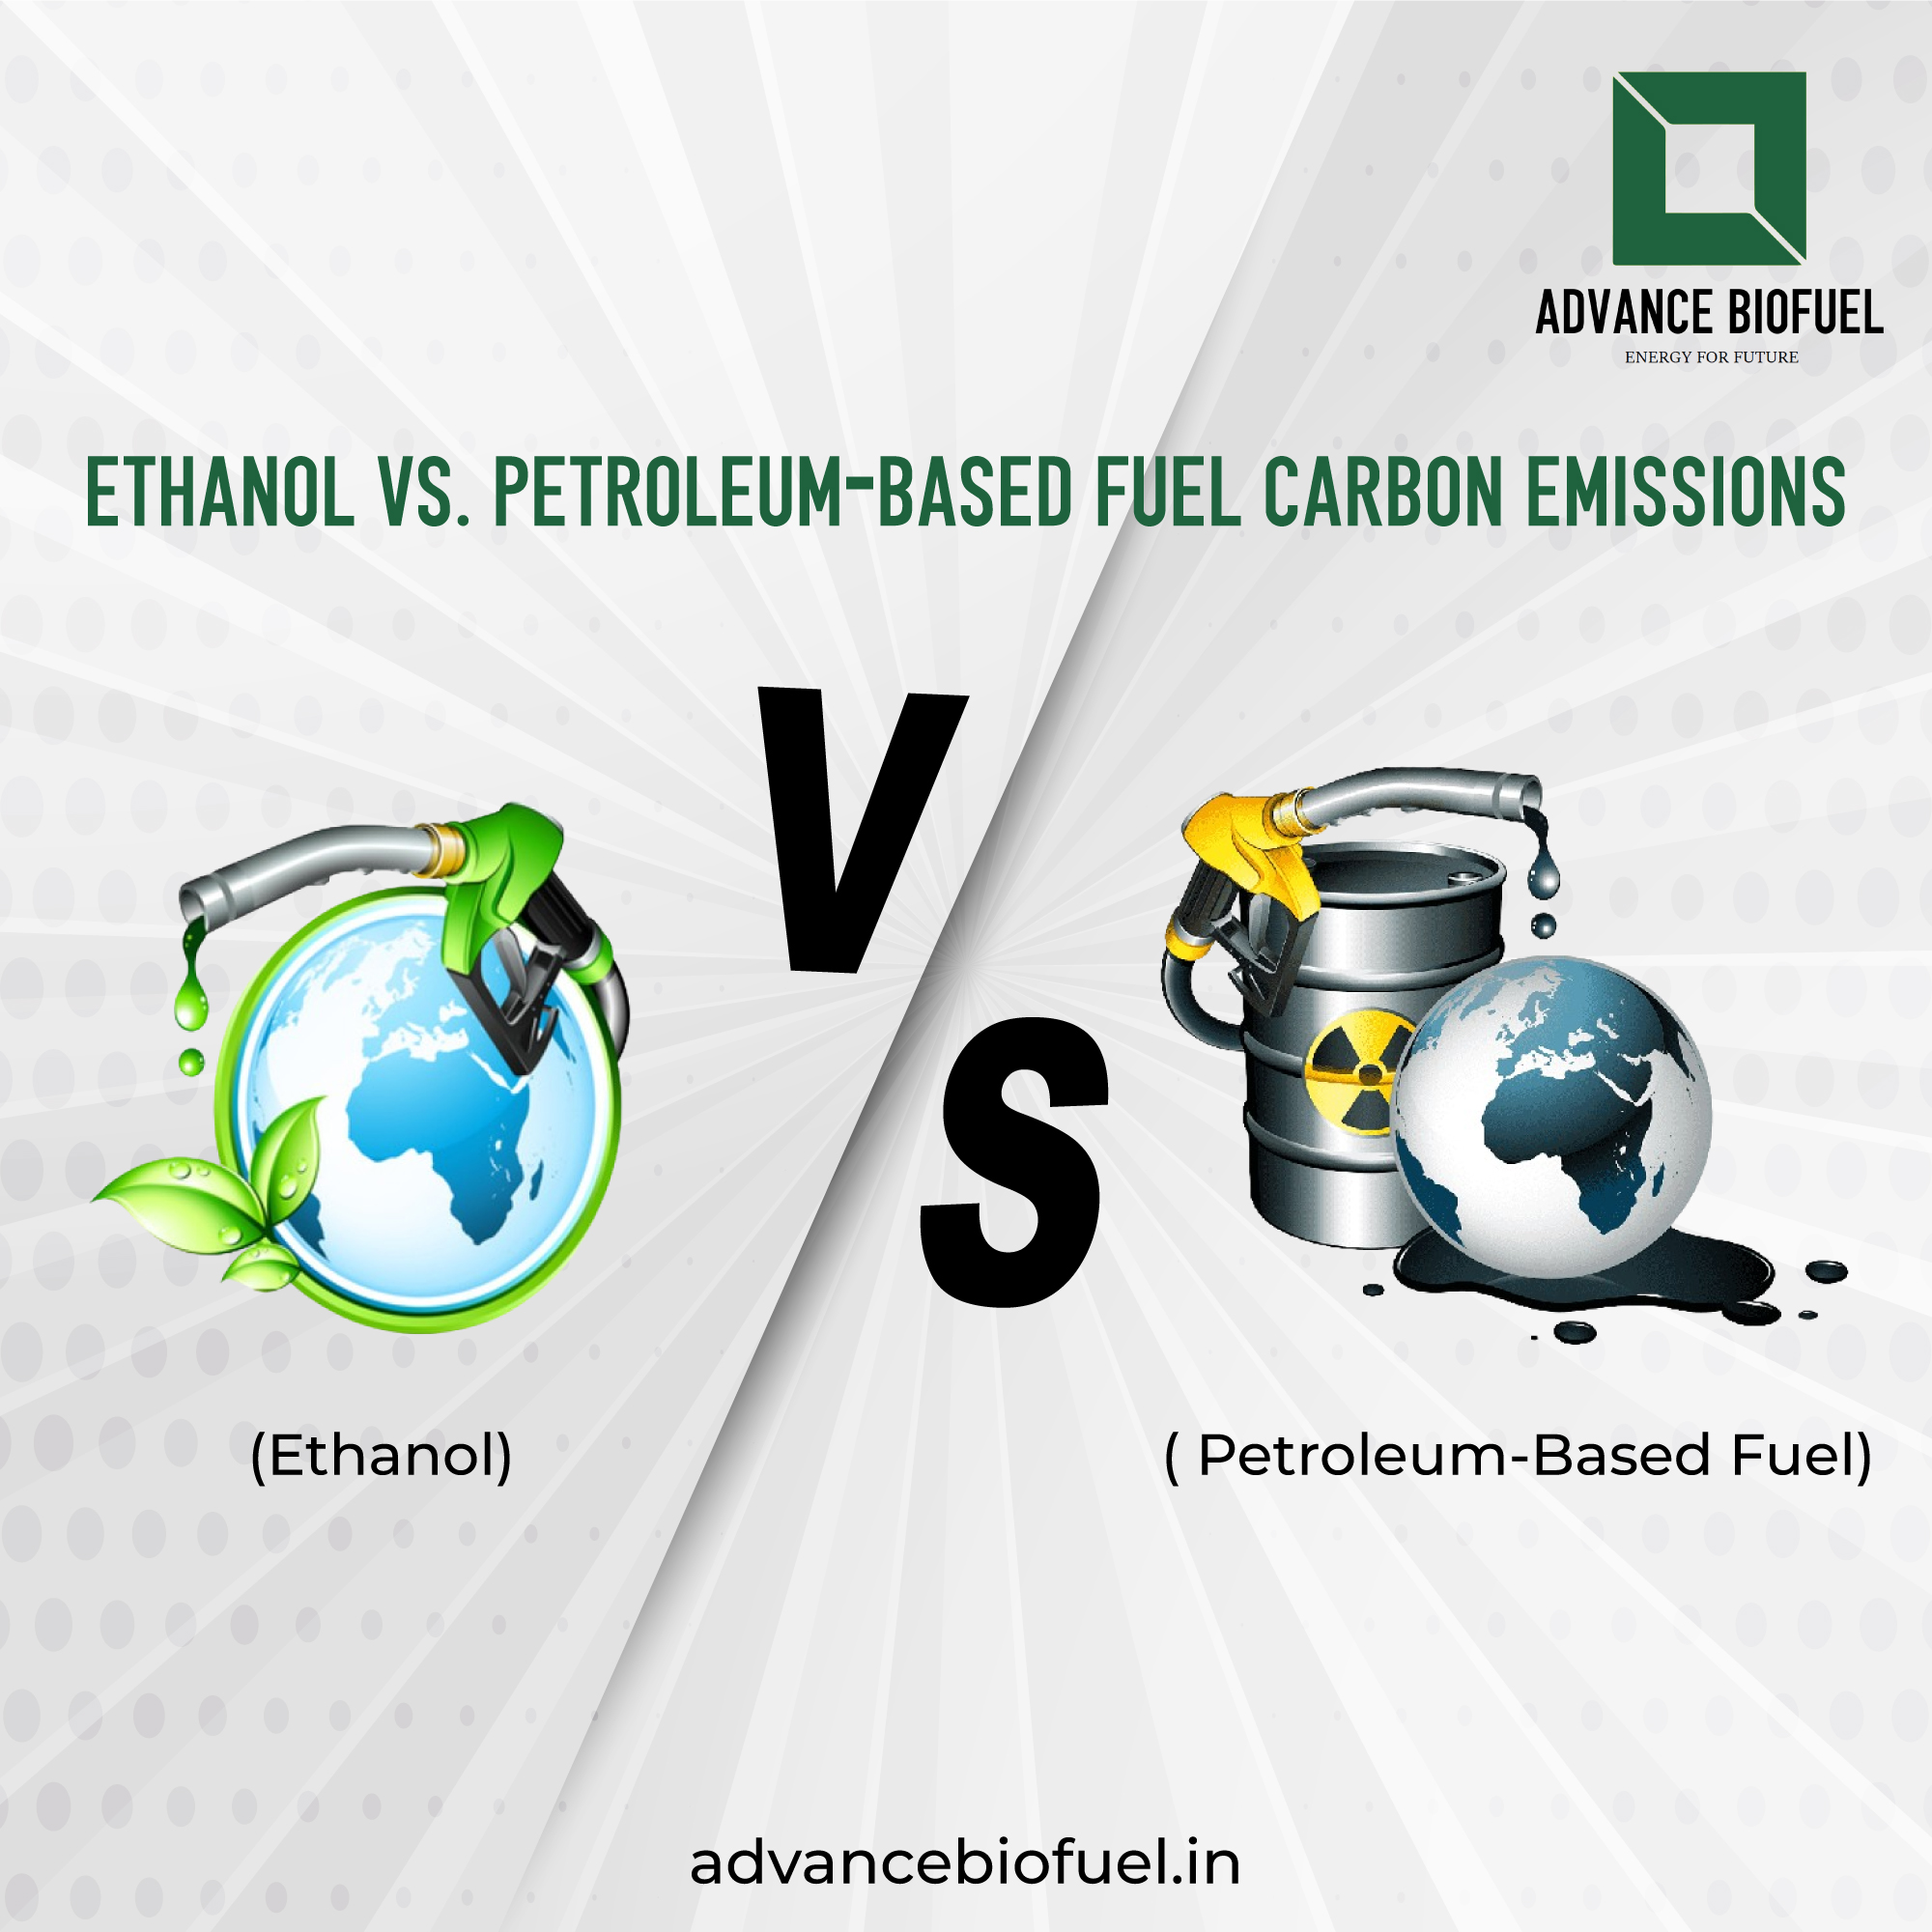 Ethanol vs. Petroleum-Based Fuel Carbon Emissions